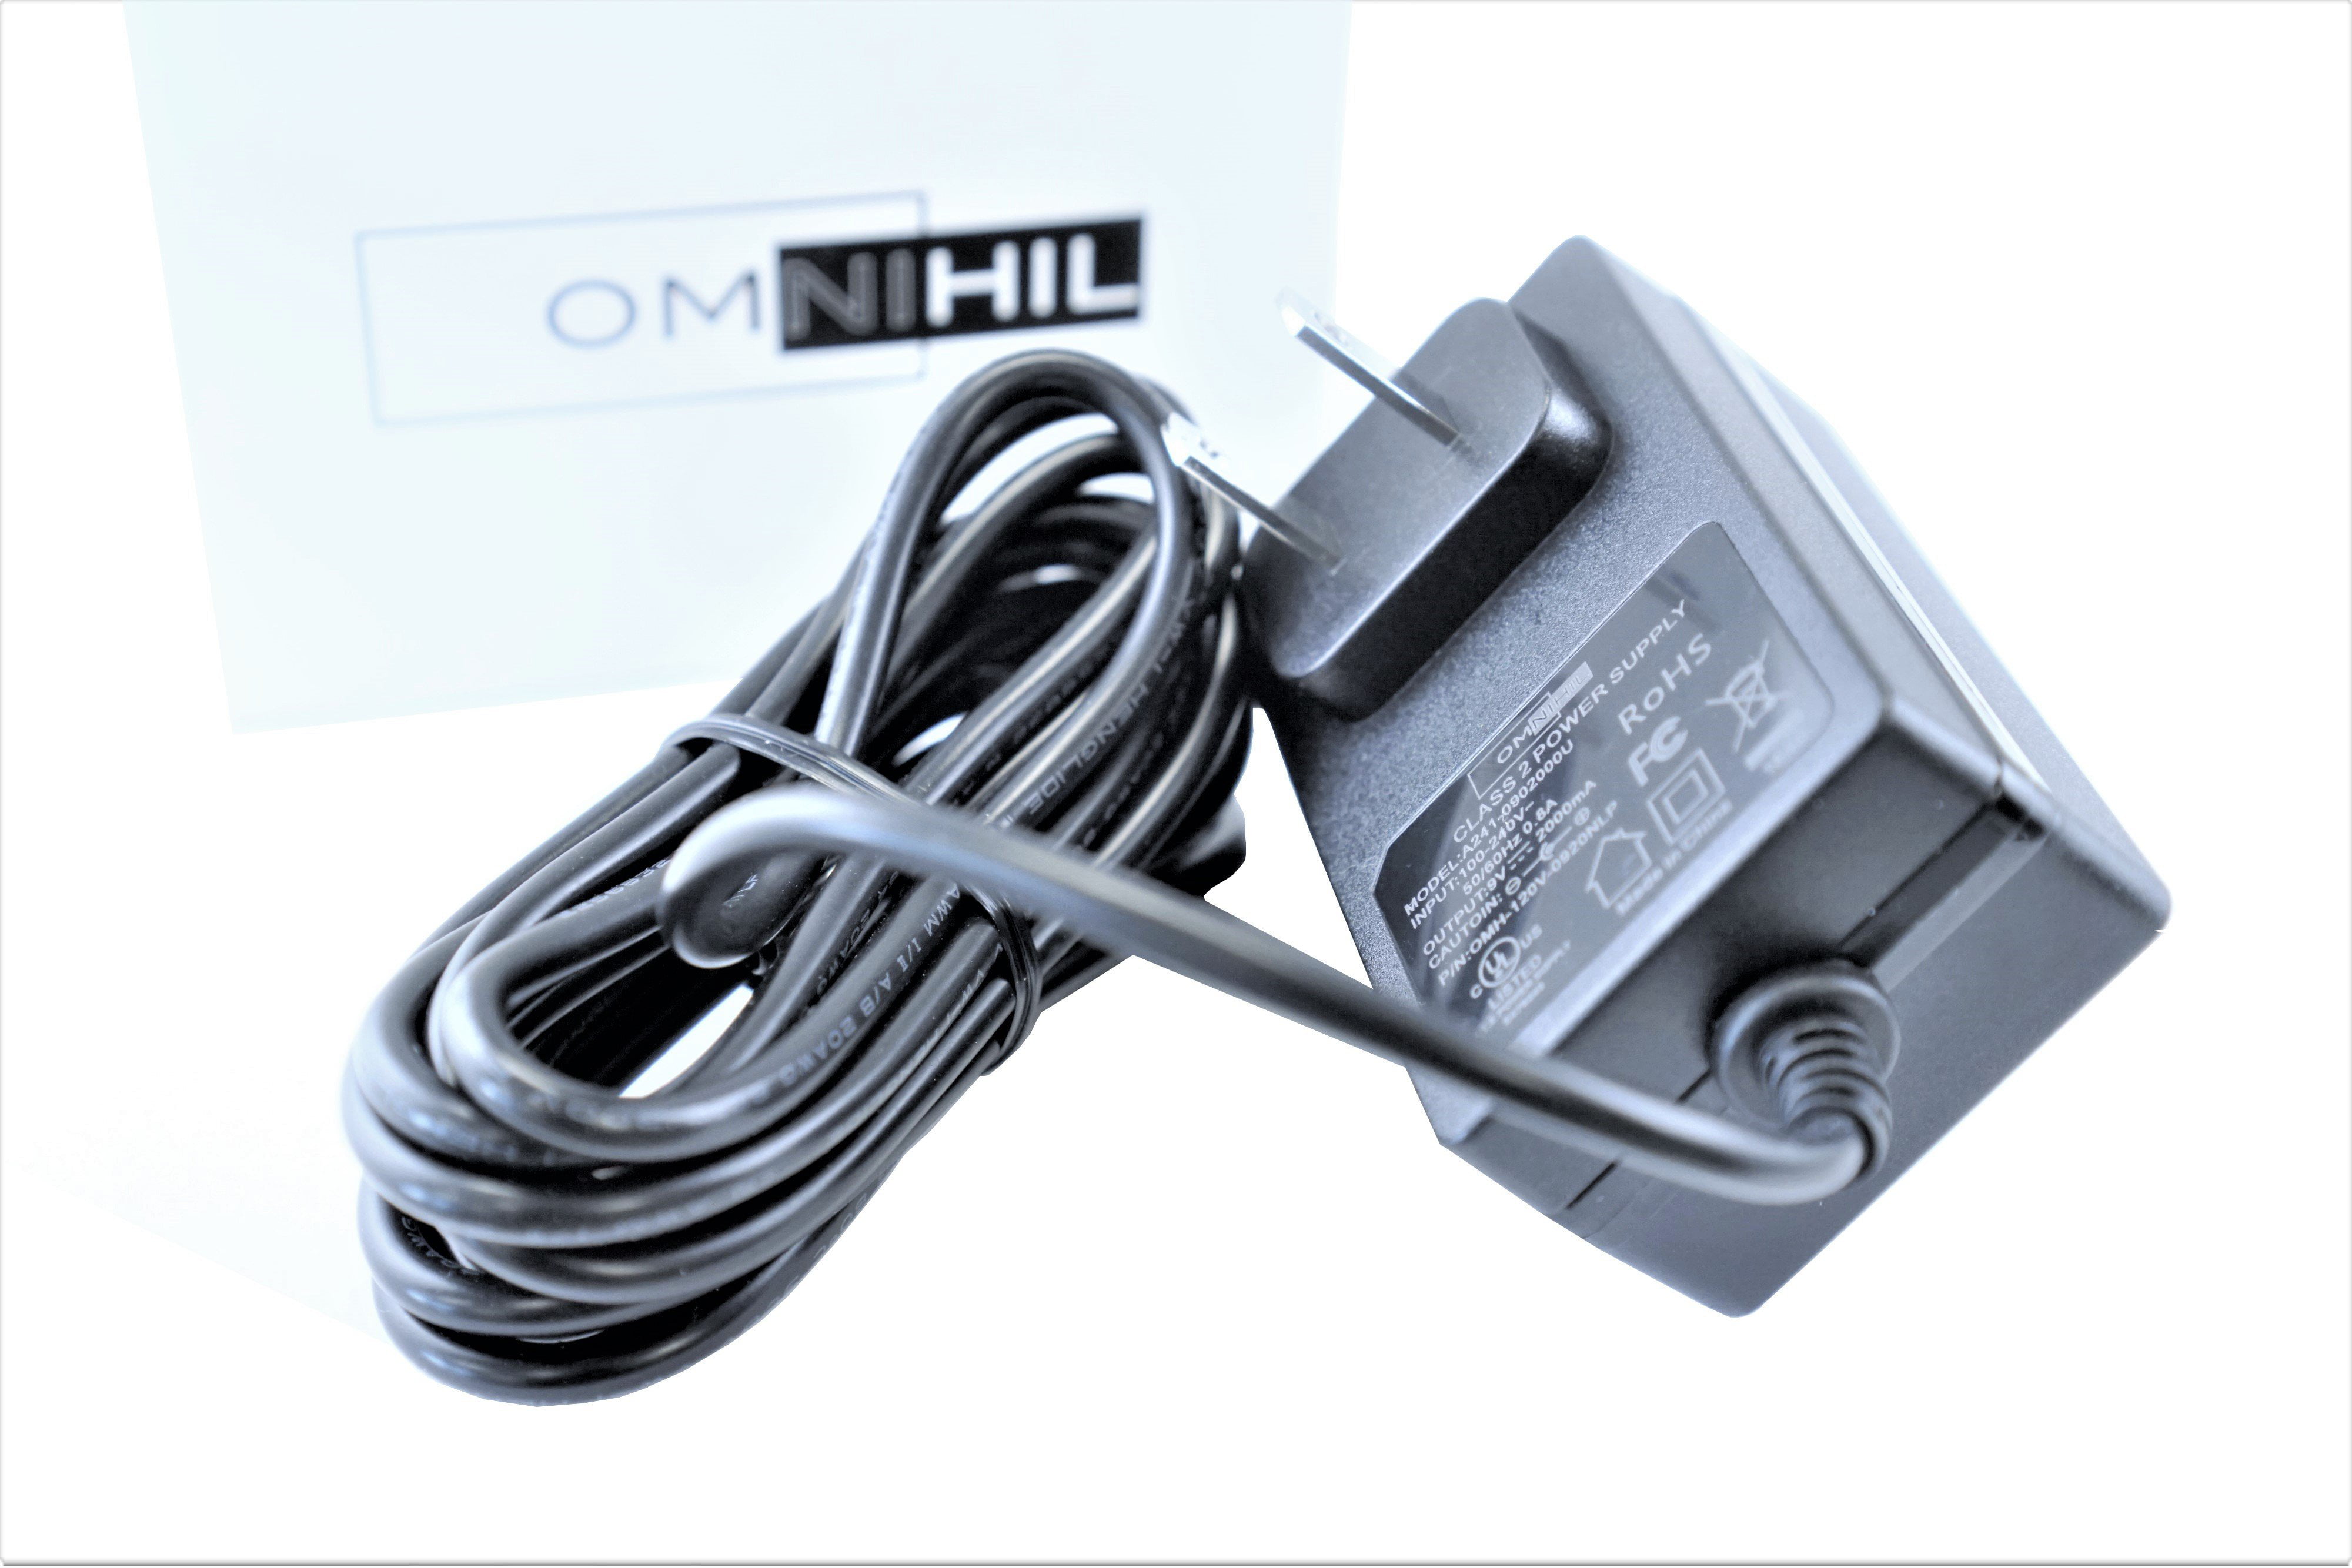 UL Listed] Omnihil Feet AC Power Cord Compatible with Western Digital 8TB  EASYSTORE External HDD (WDBCKA0080HBK-NESN)